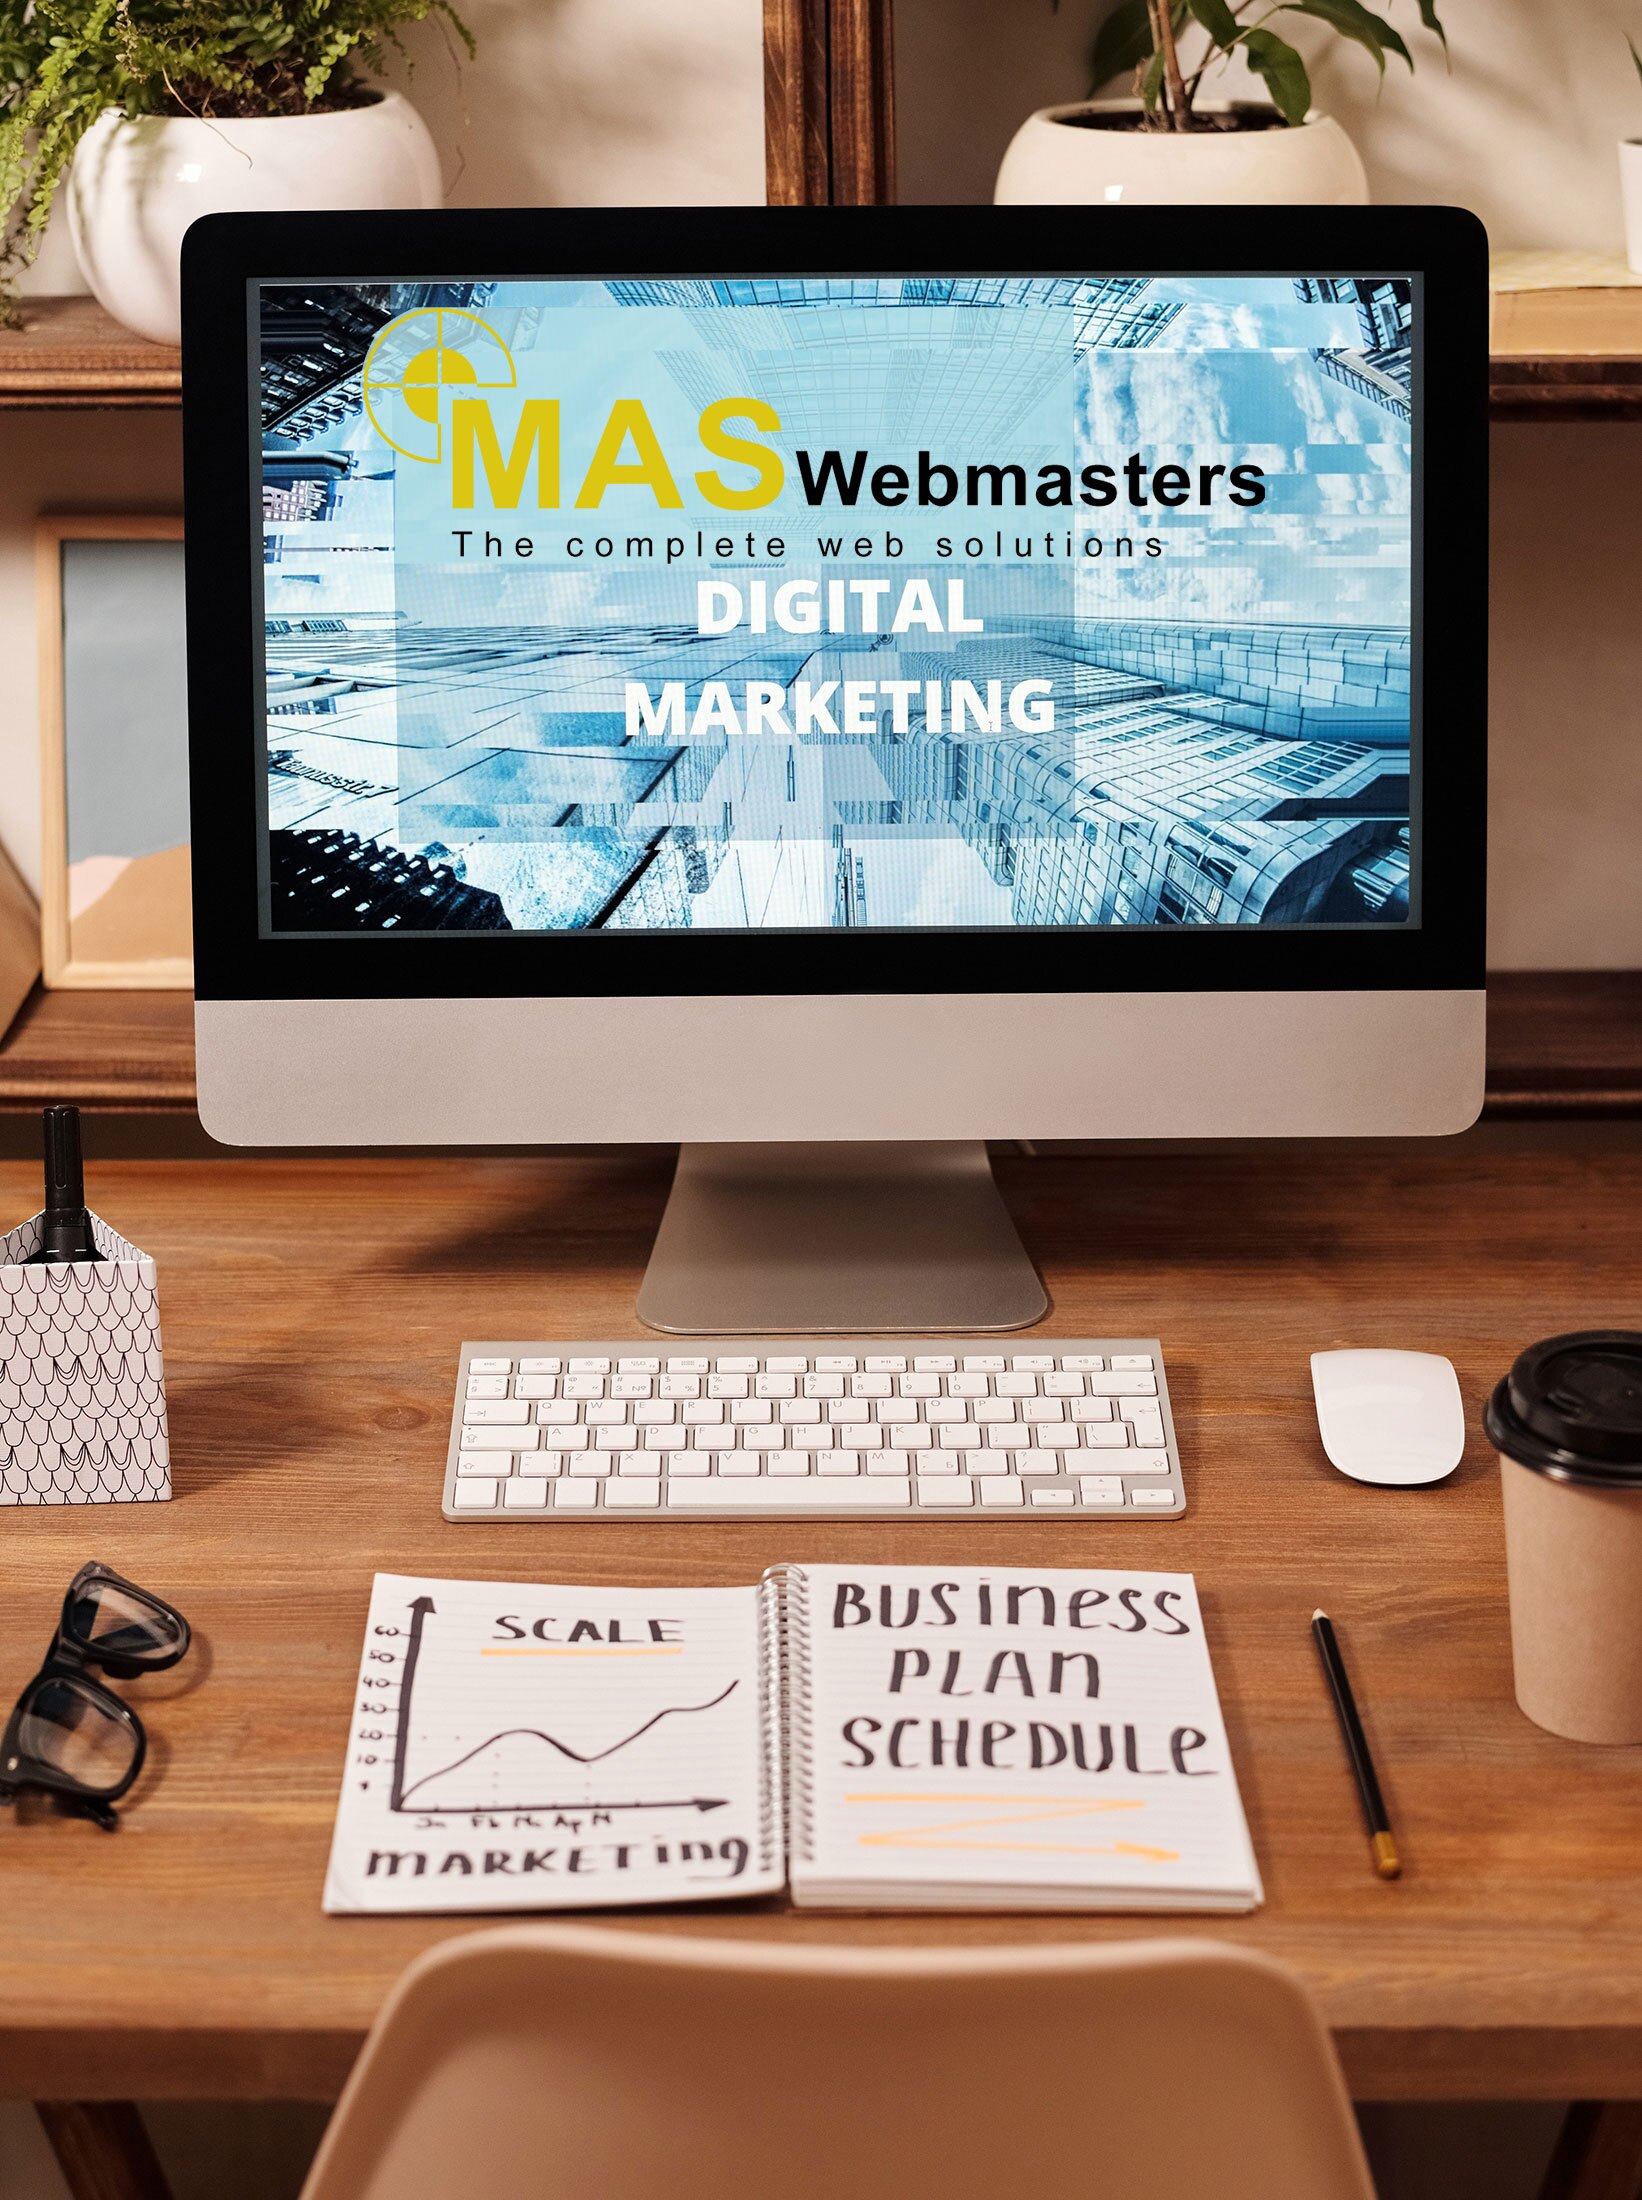 Why Choose MAS Webmasters